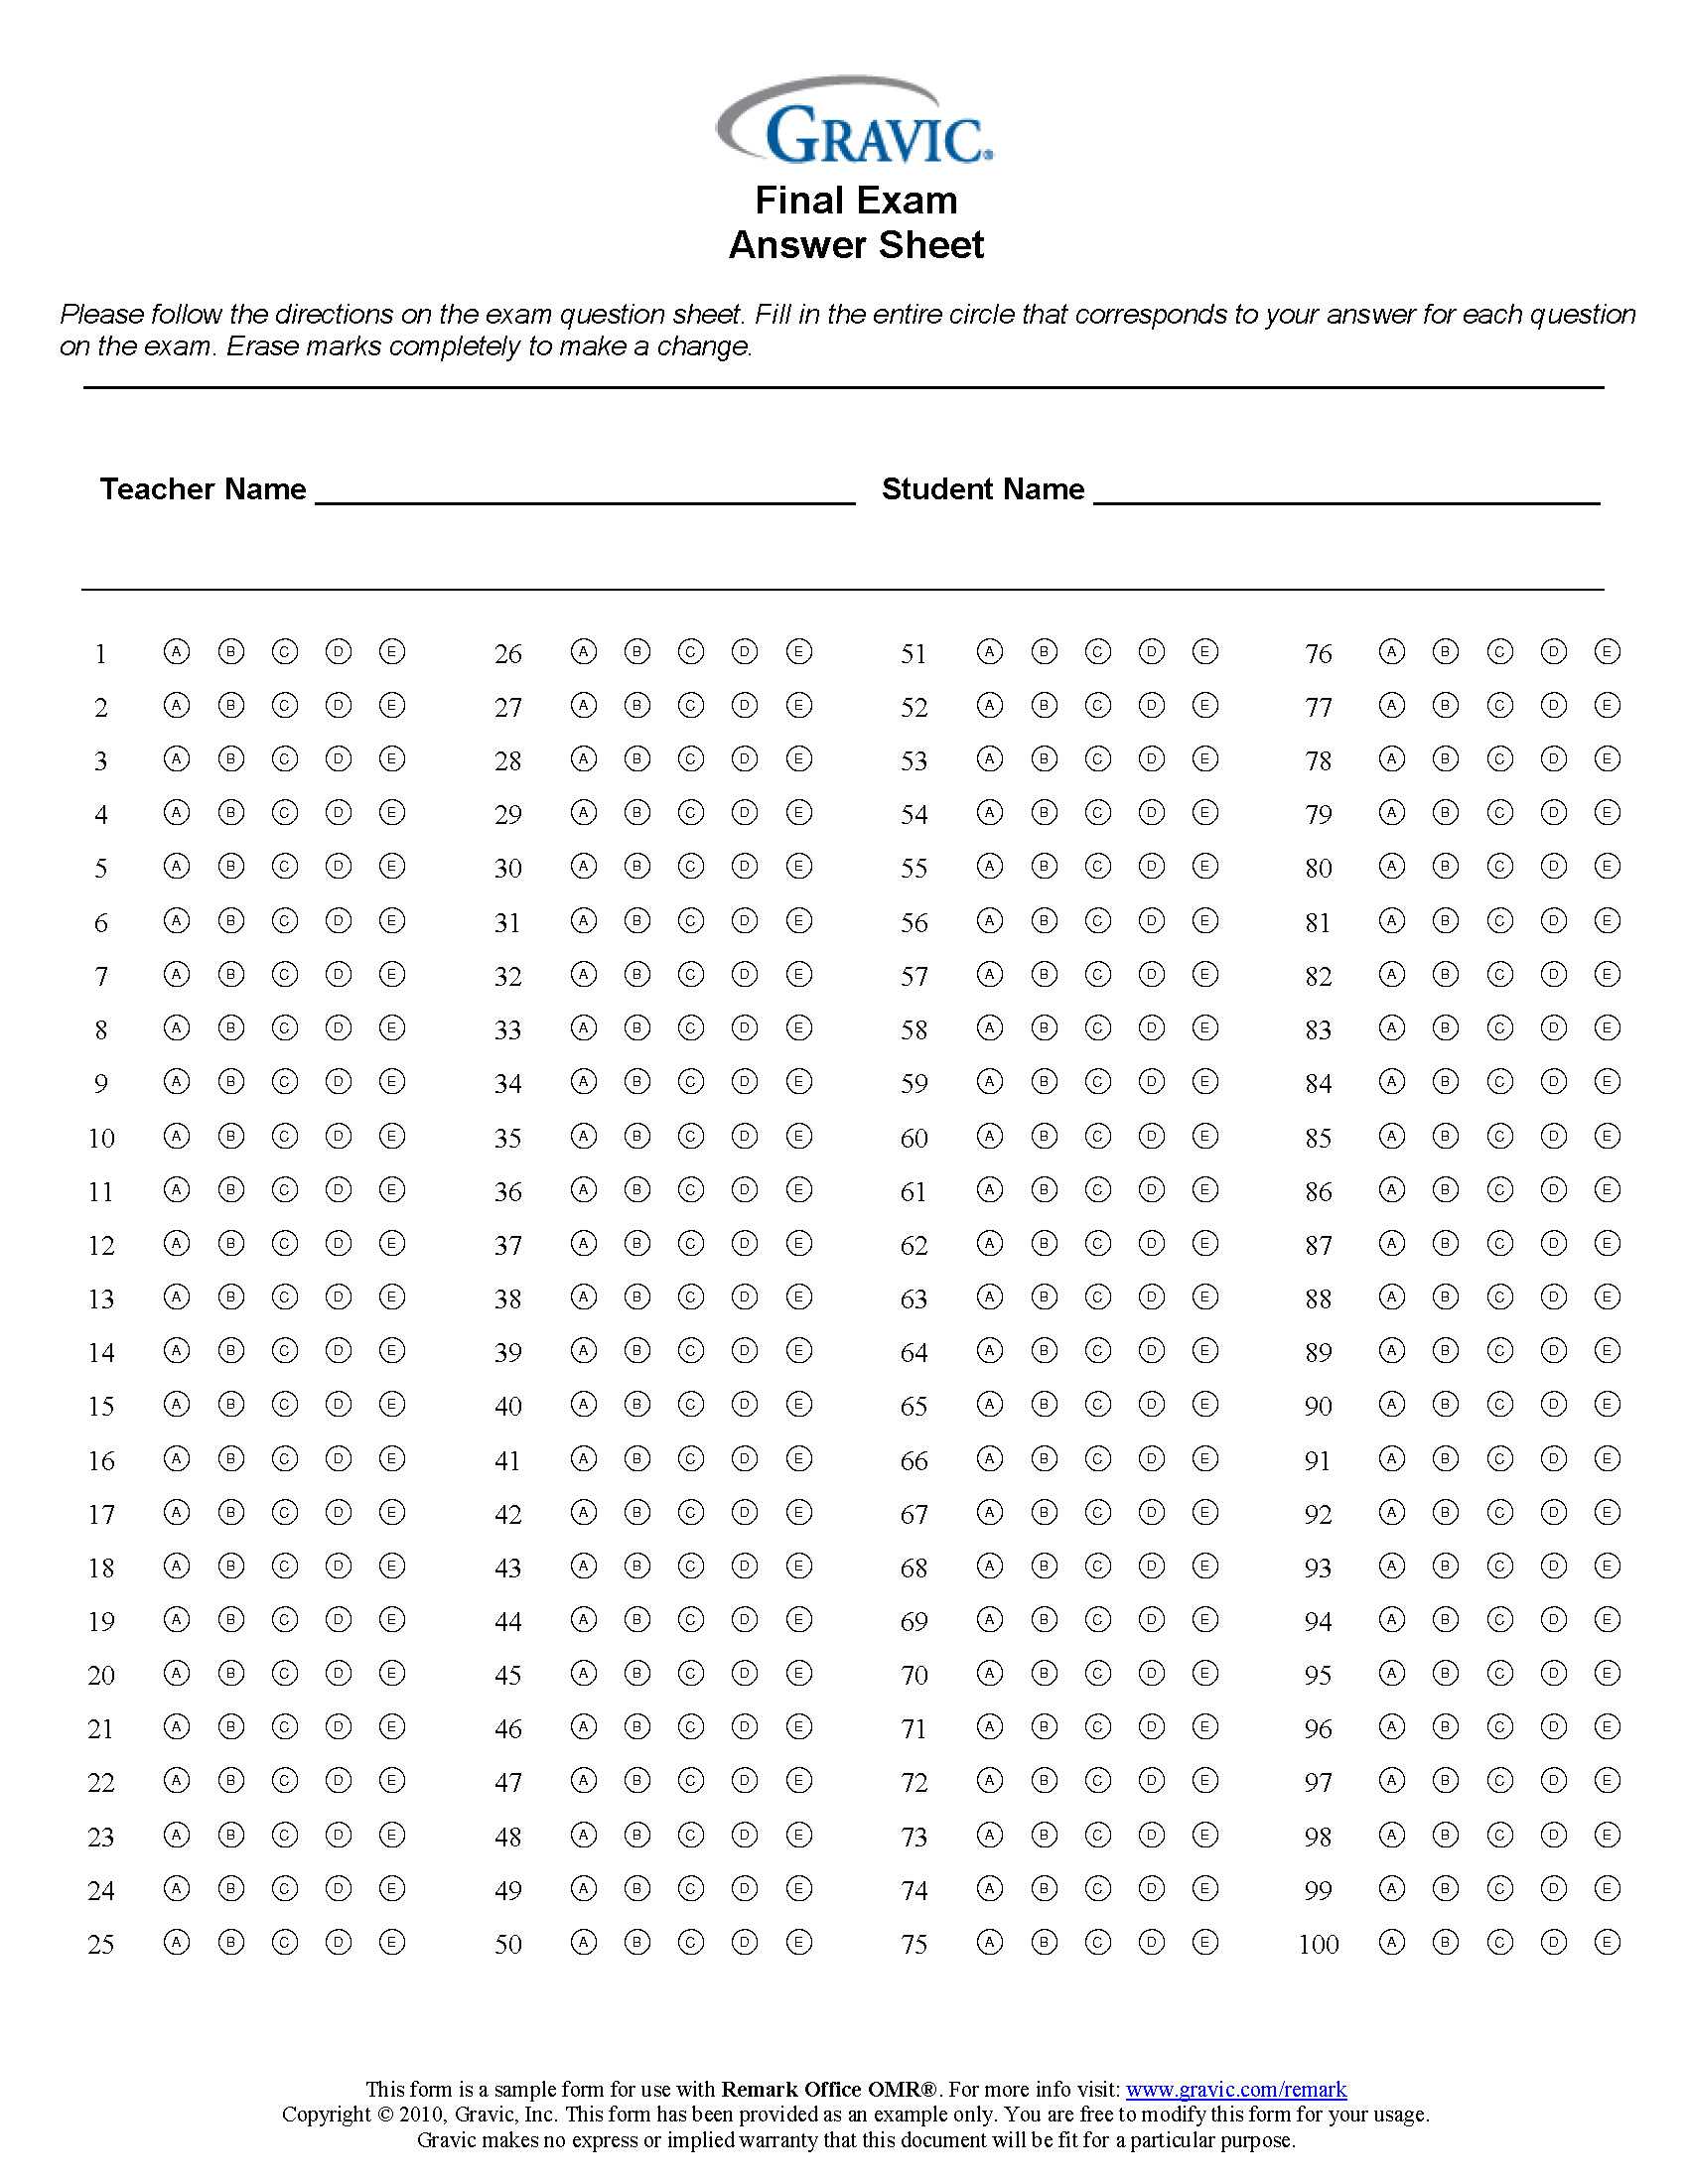 Final Exam 100 Question Test Answer Sheet · Remark Software For Blank Answer Sheet Template 1 100